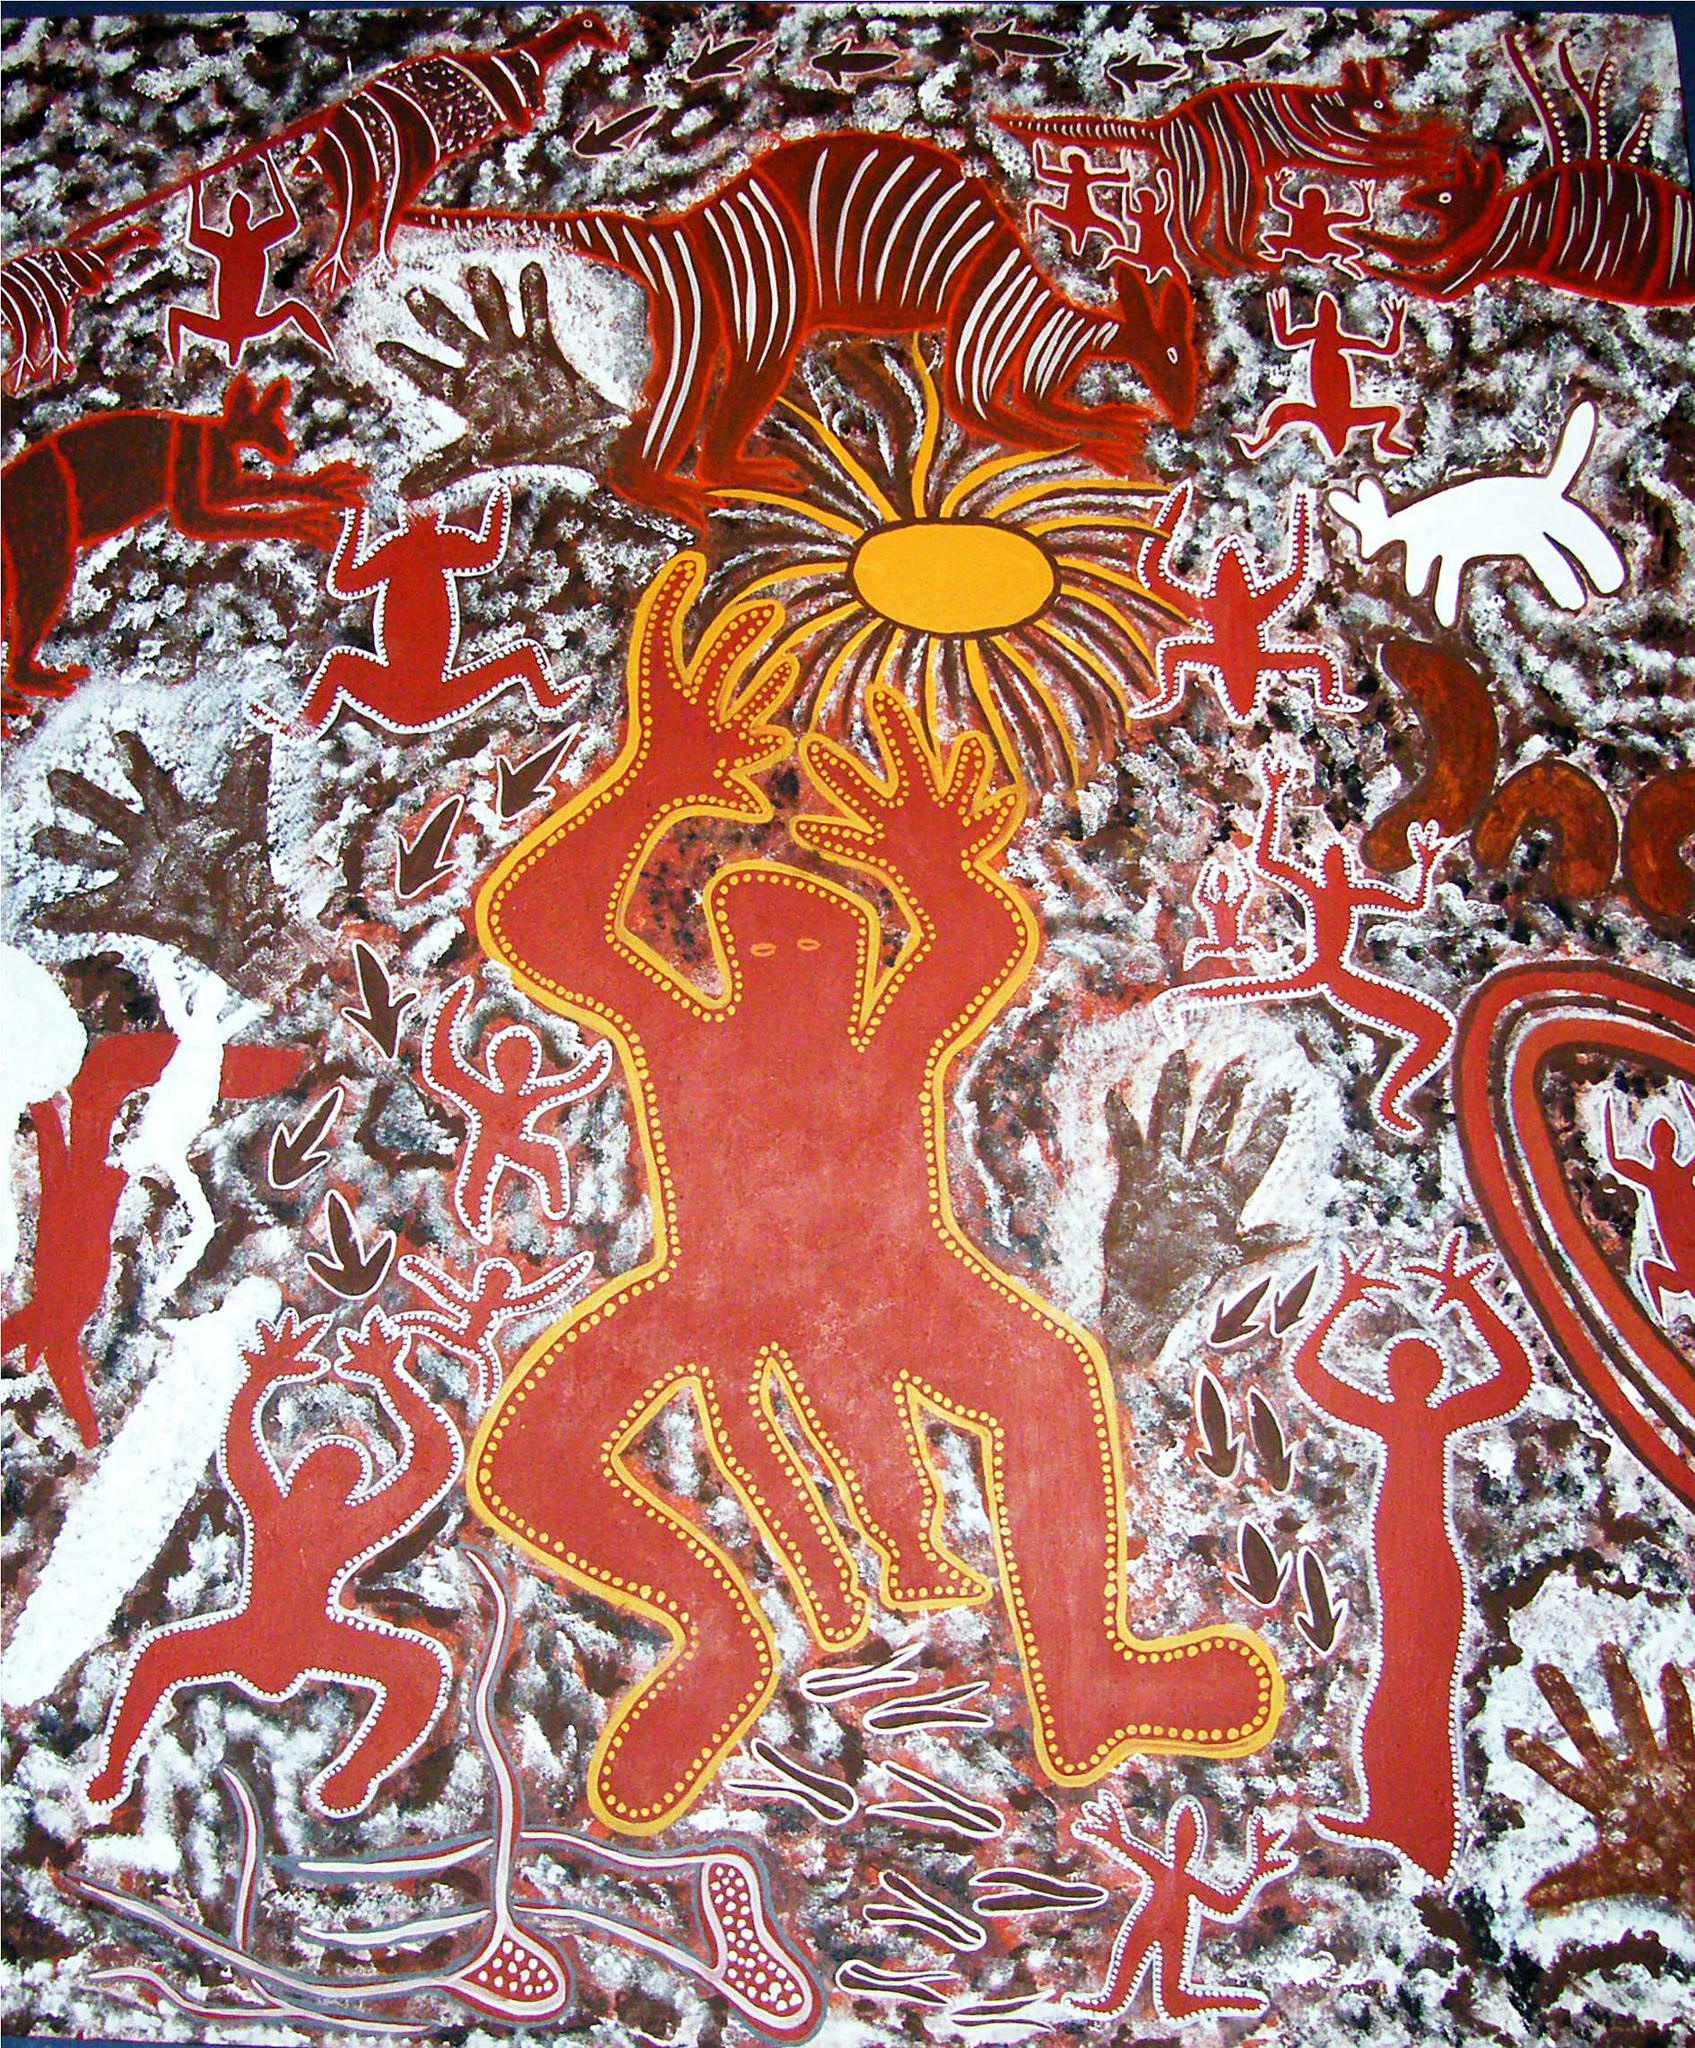 Aboriginal Art - Story